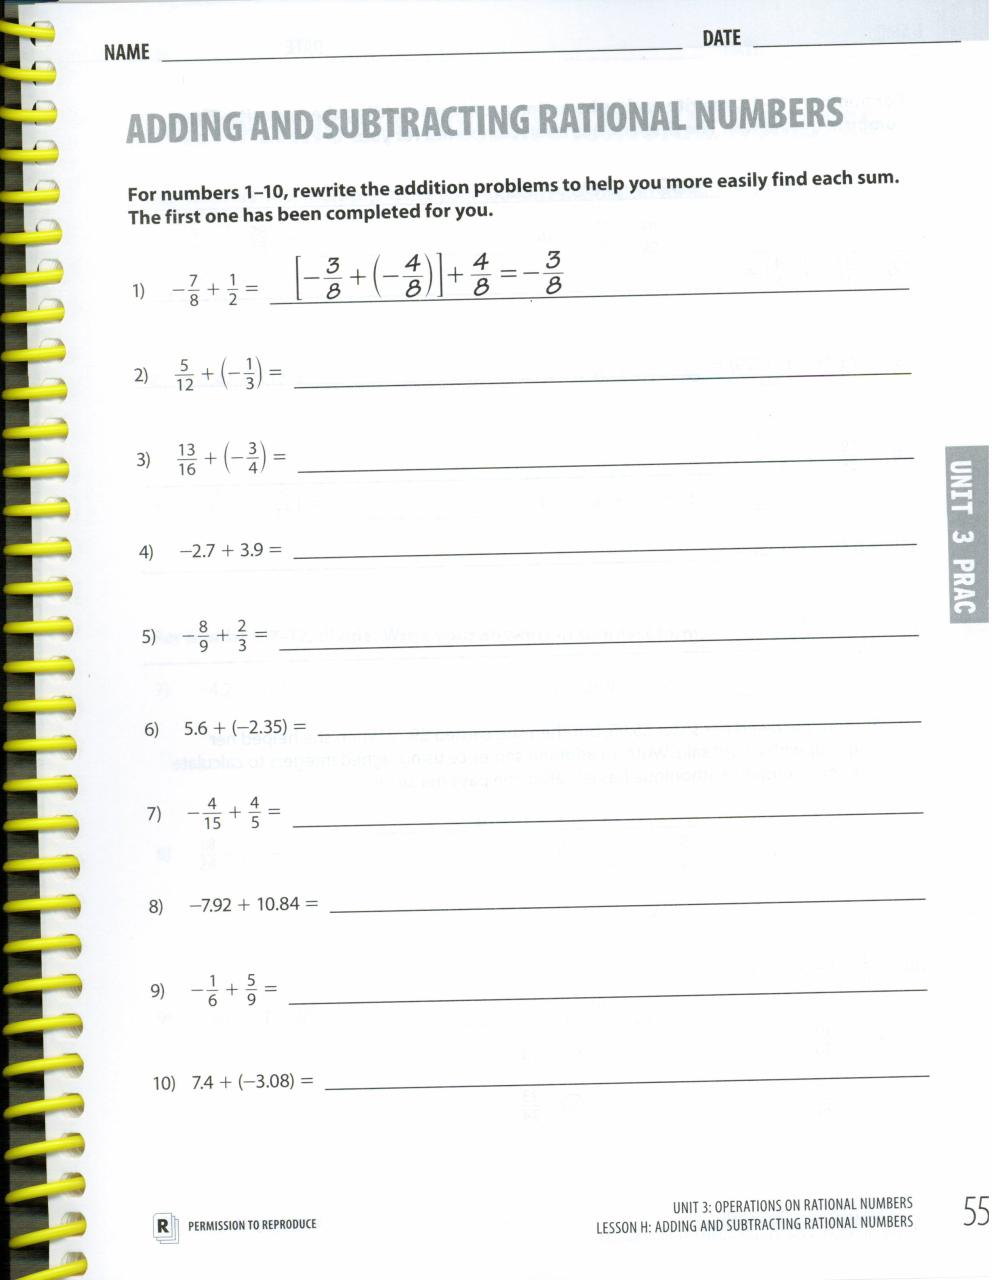 adding-and-subtracting-rational-numbers-word-problems-worksheet-pdf-kidsworksheetfun